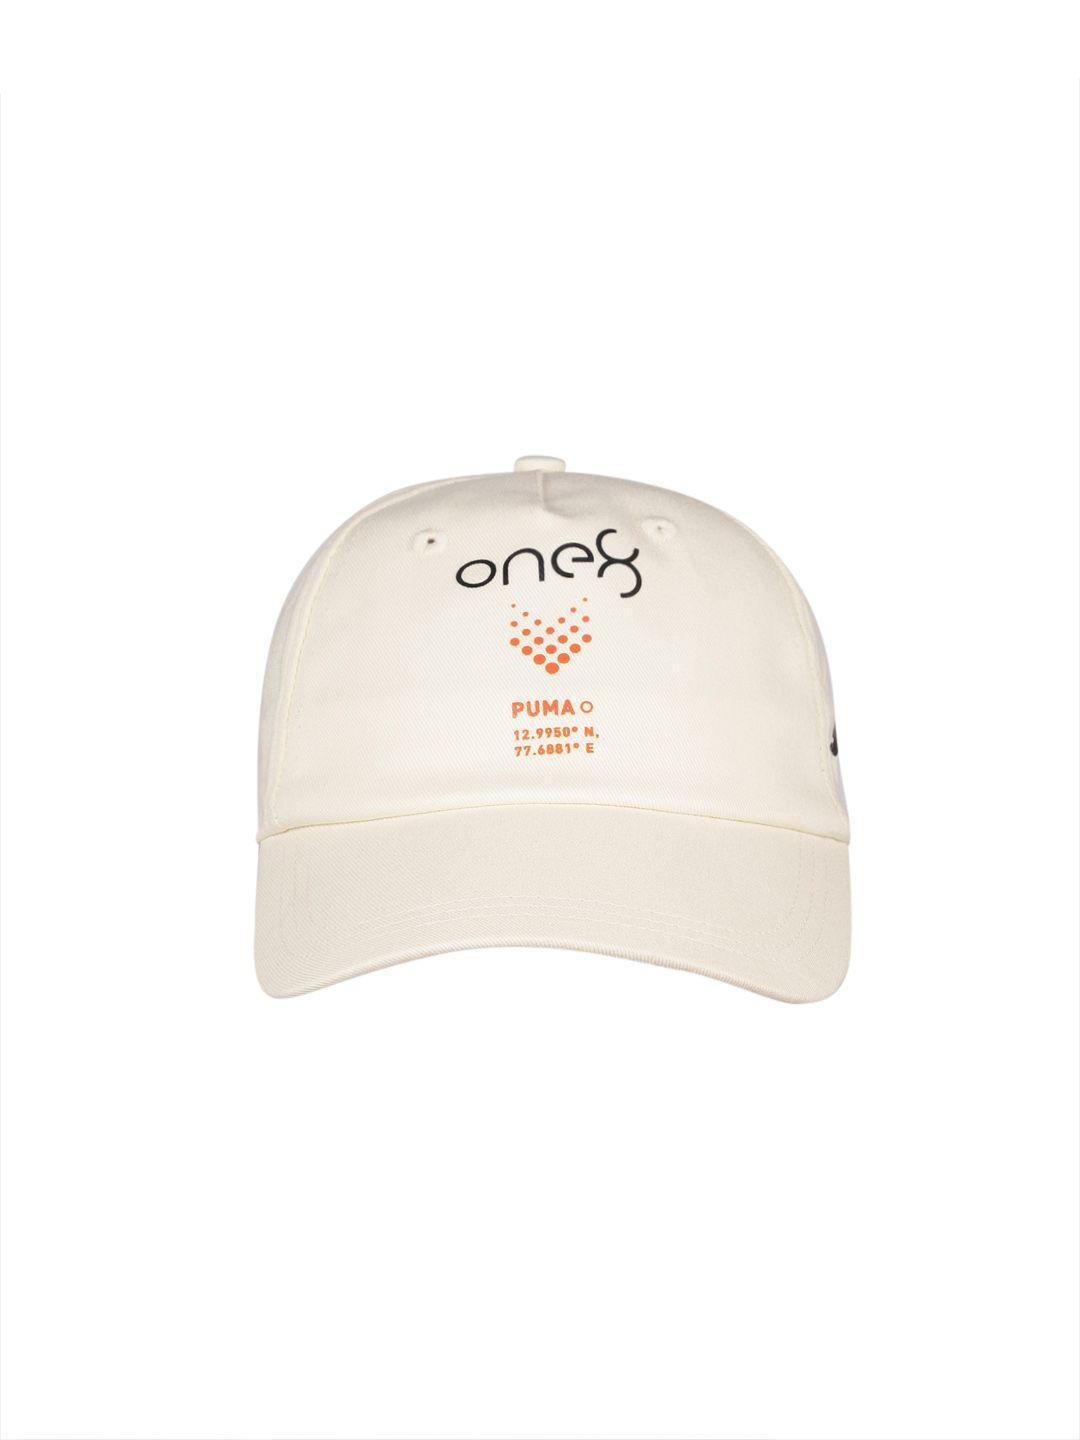 one8 x puma unisex brand logo print core pure cotton baseball cap